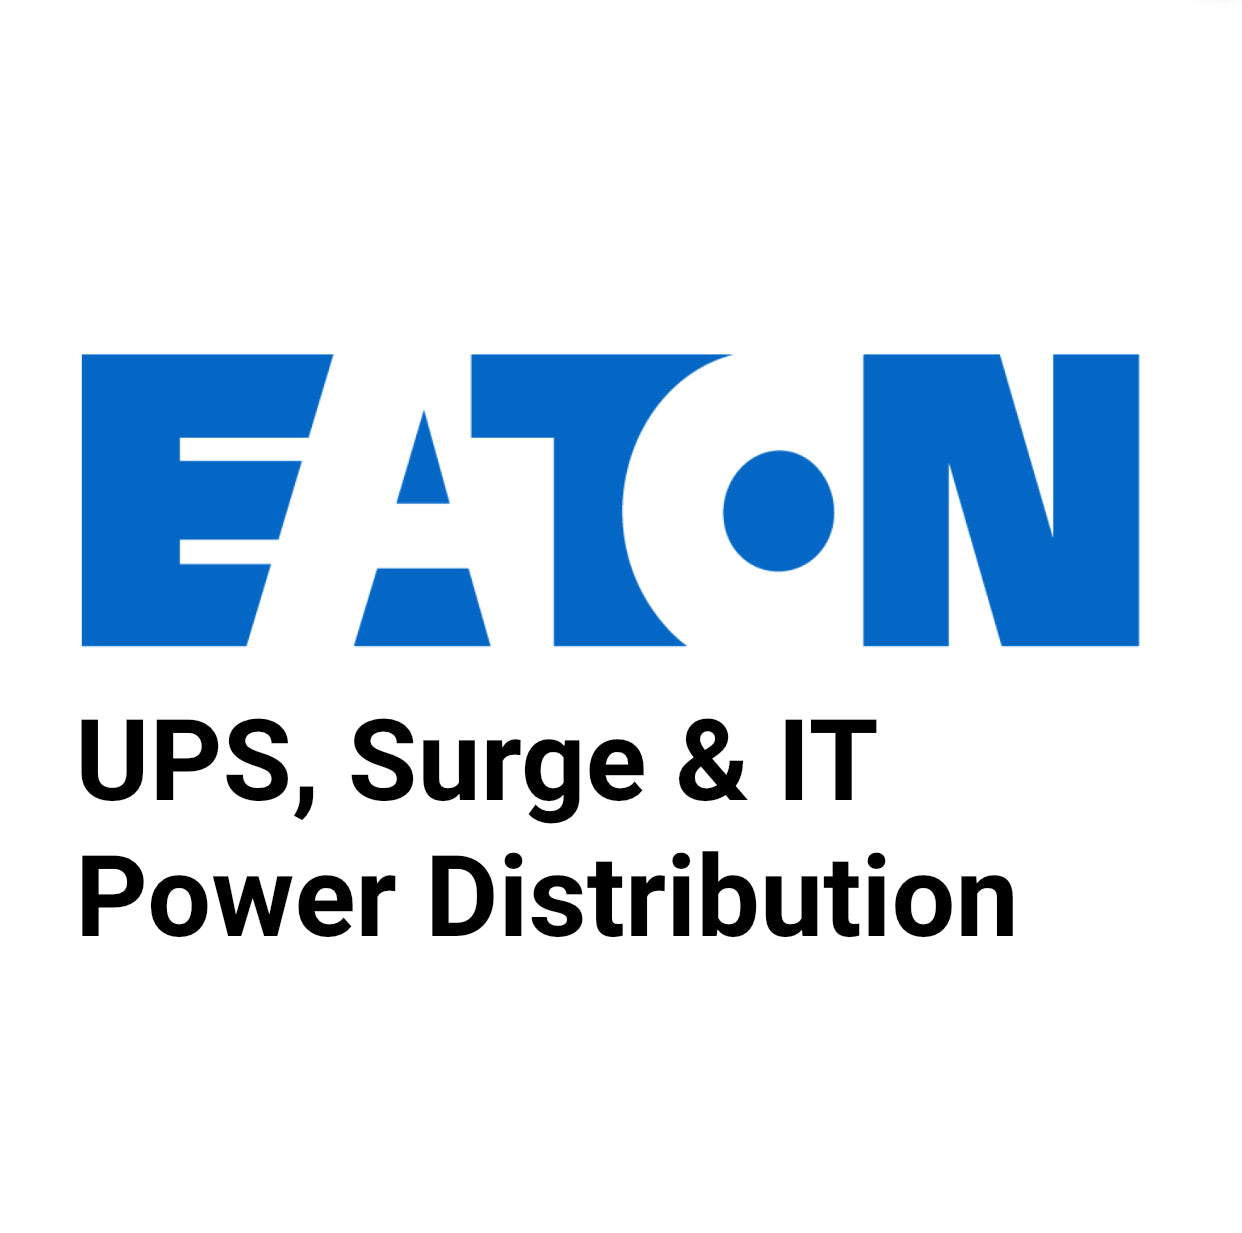 EATON UPS, SURGE & IT POWER DISTRIBUTION